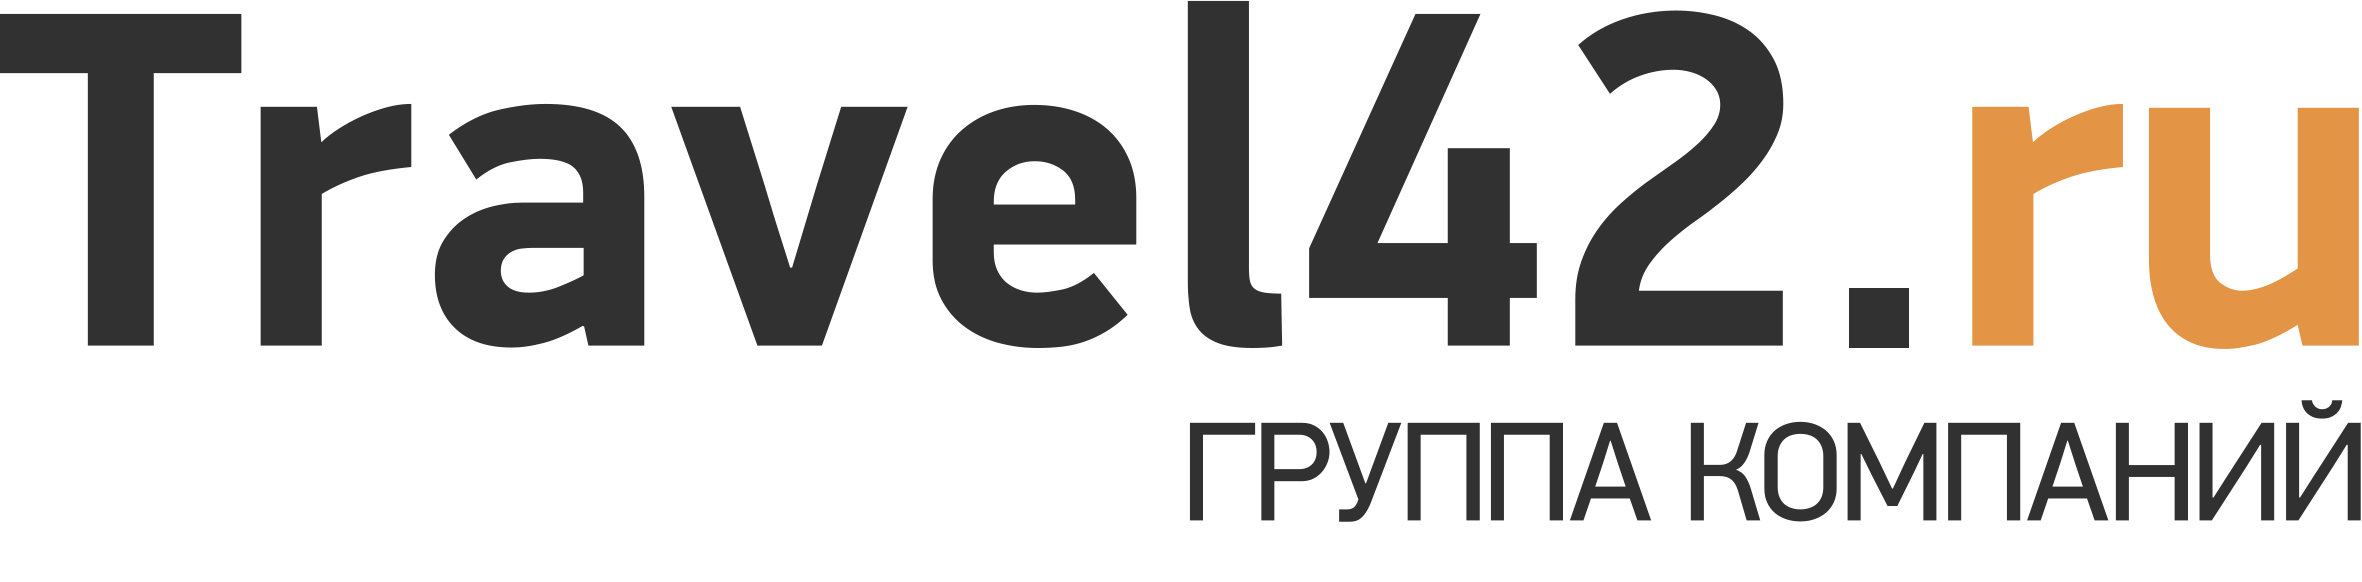 Группа компаний Travel42.ru